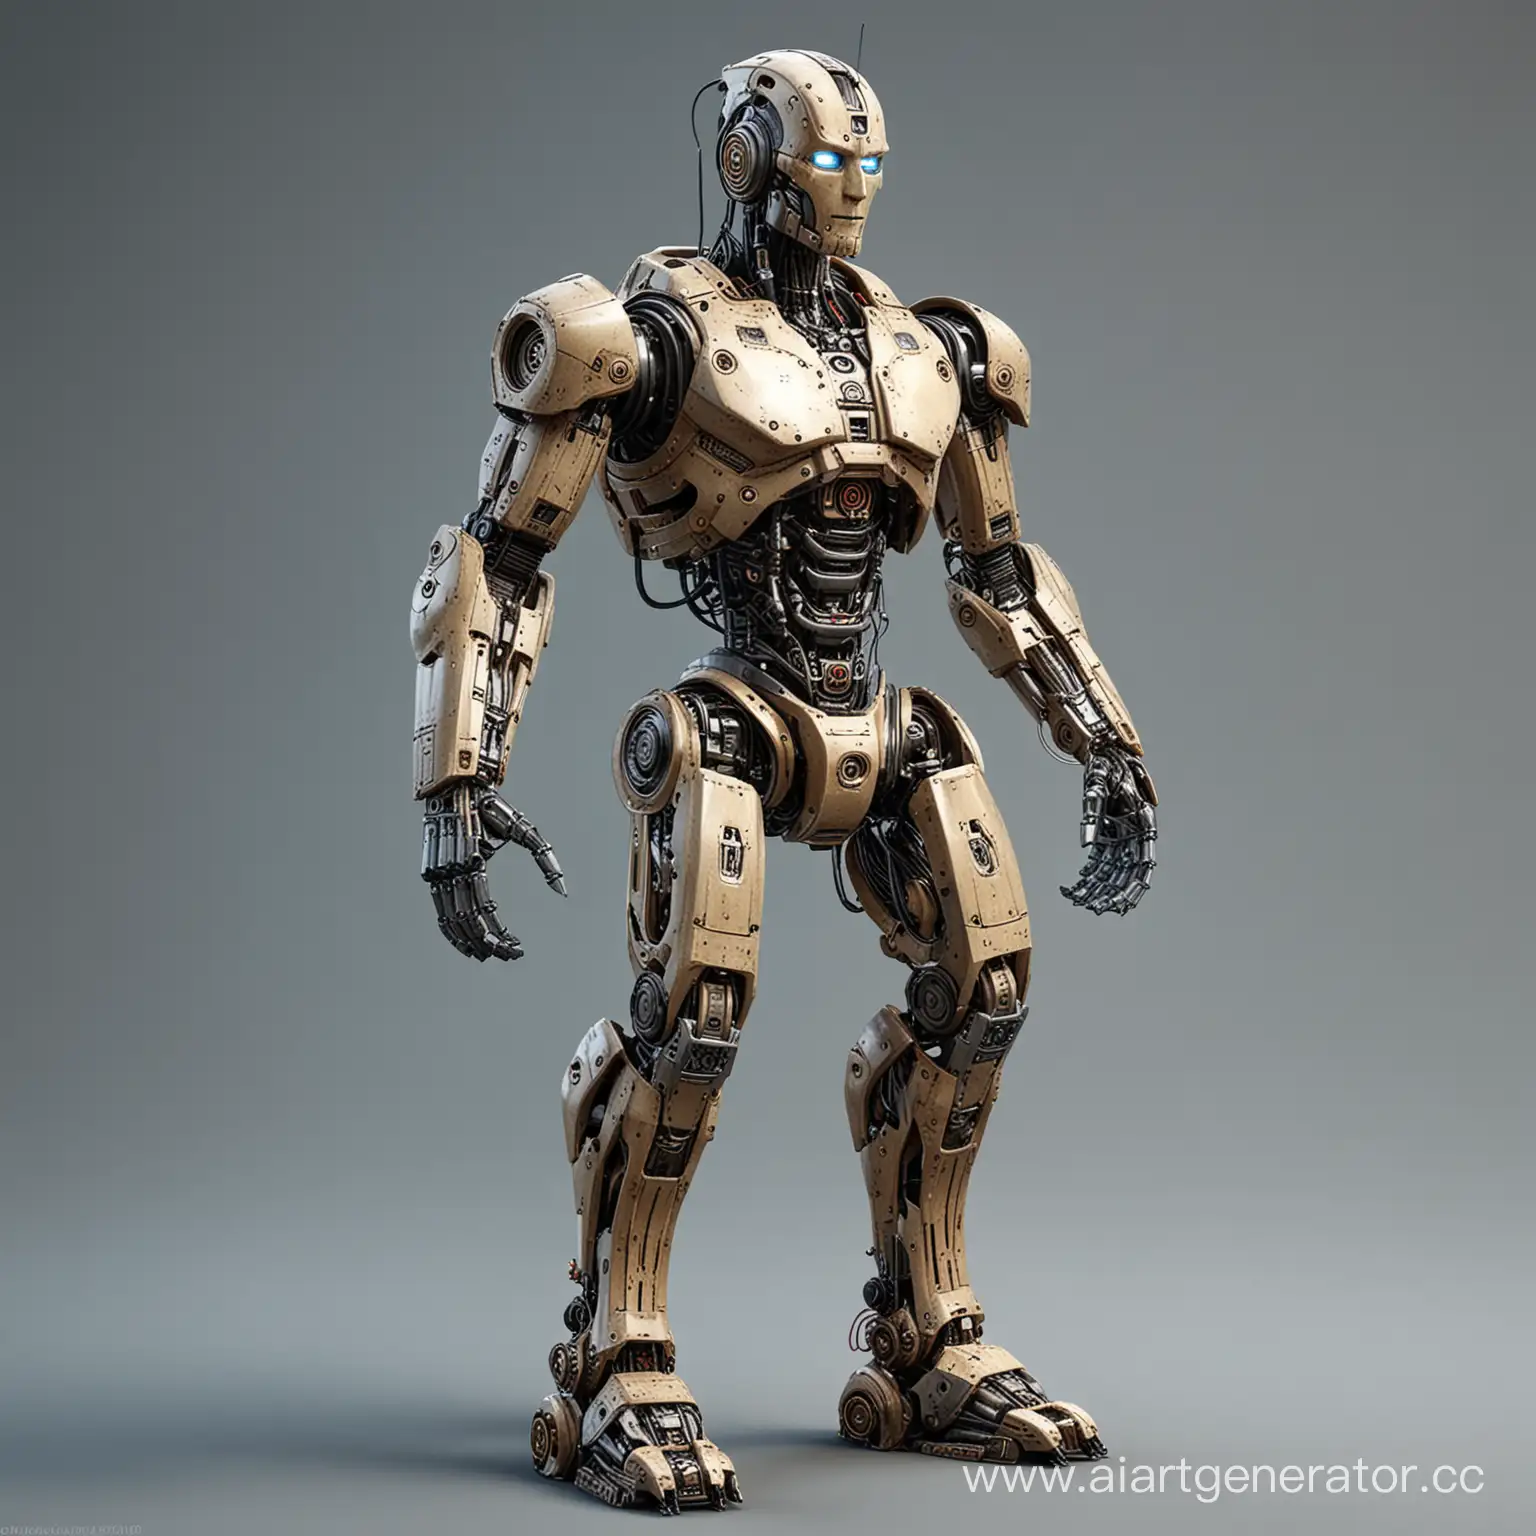 Roman-Sharafutdinov-Robot-Futuristic-Android-with-Advanced-Technology